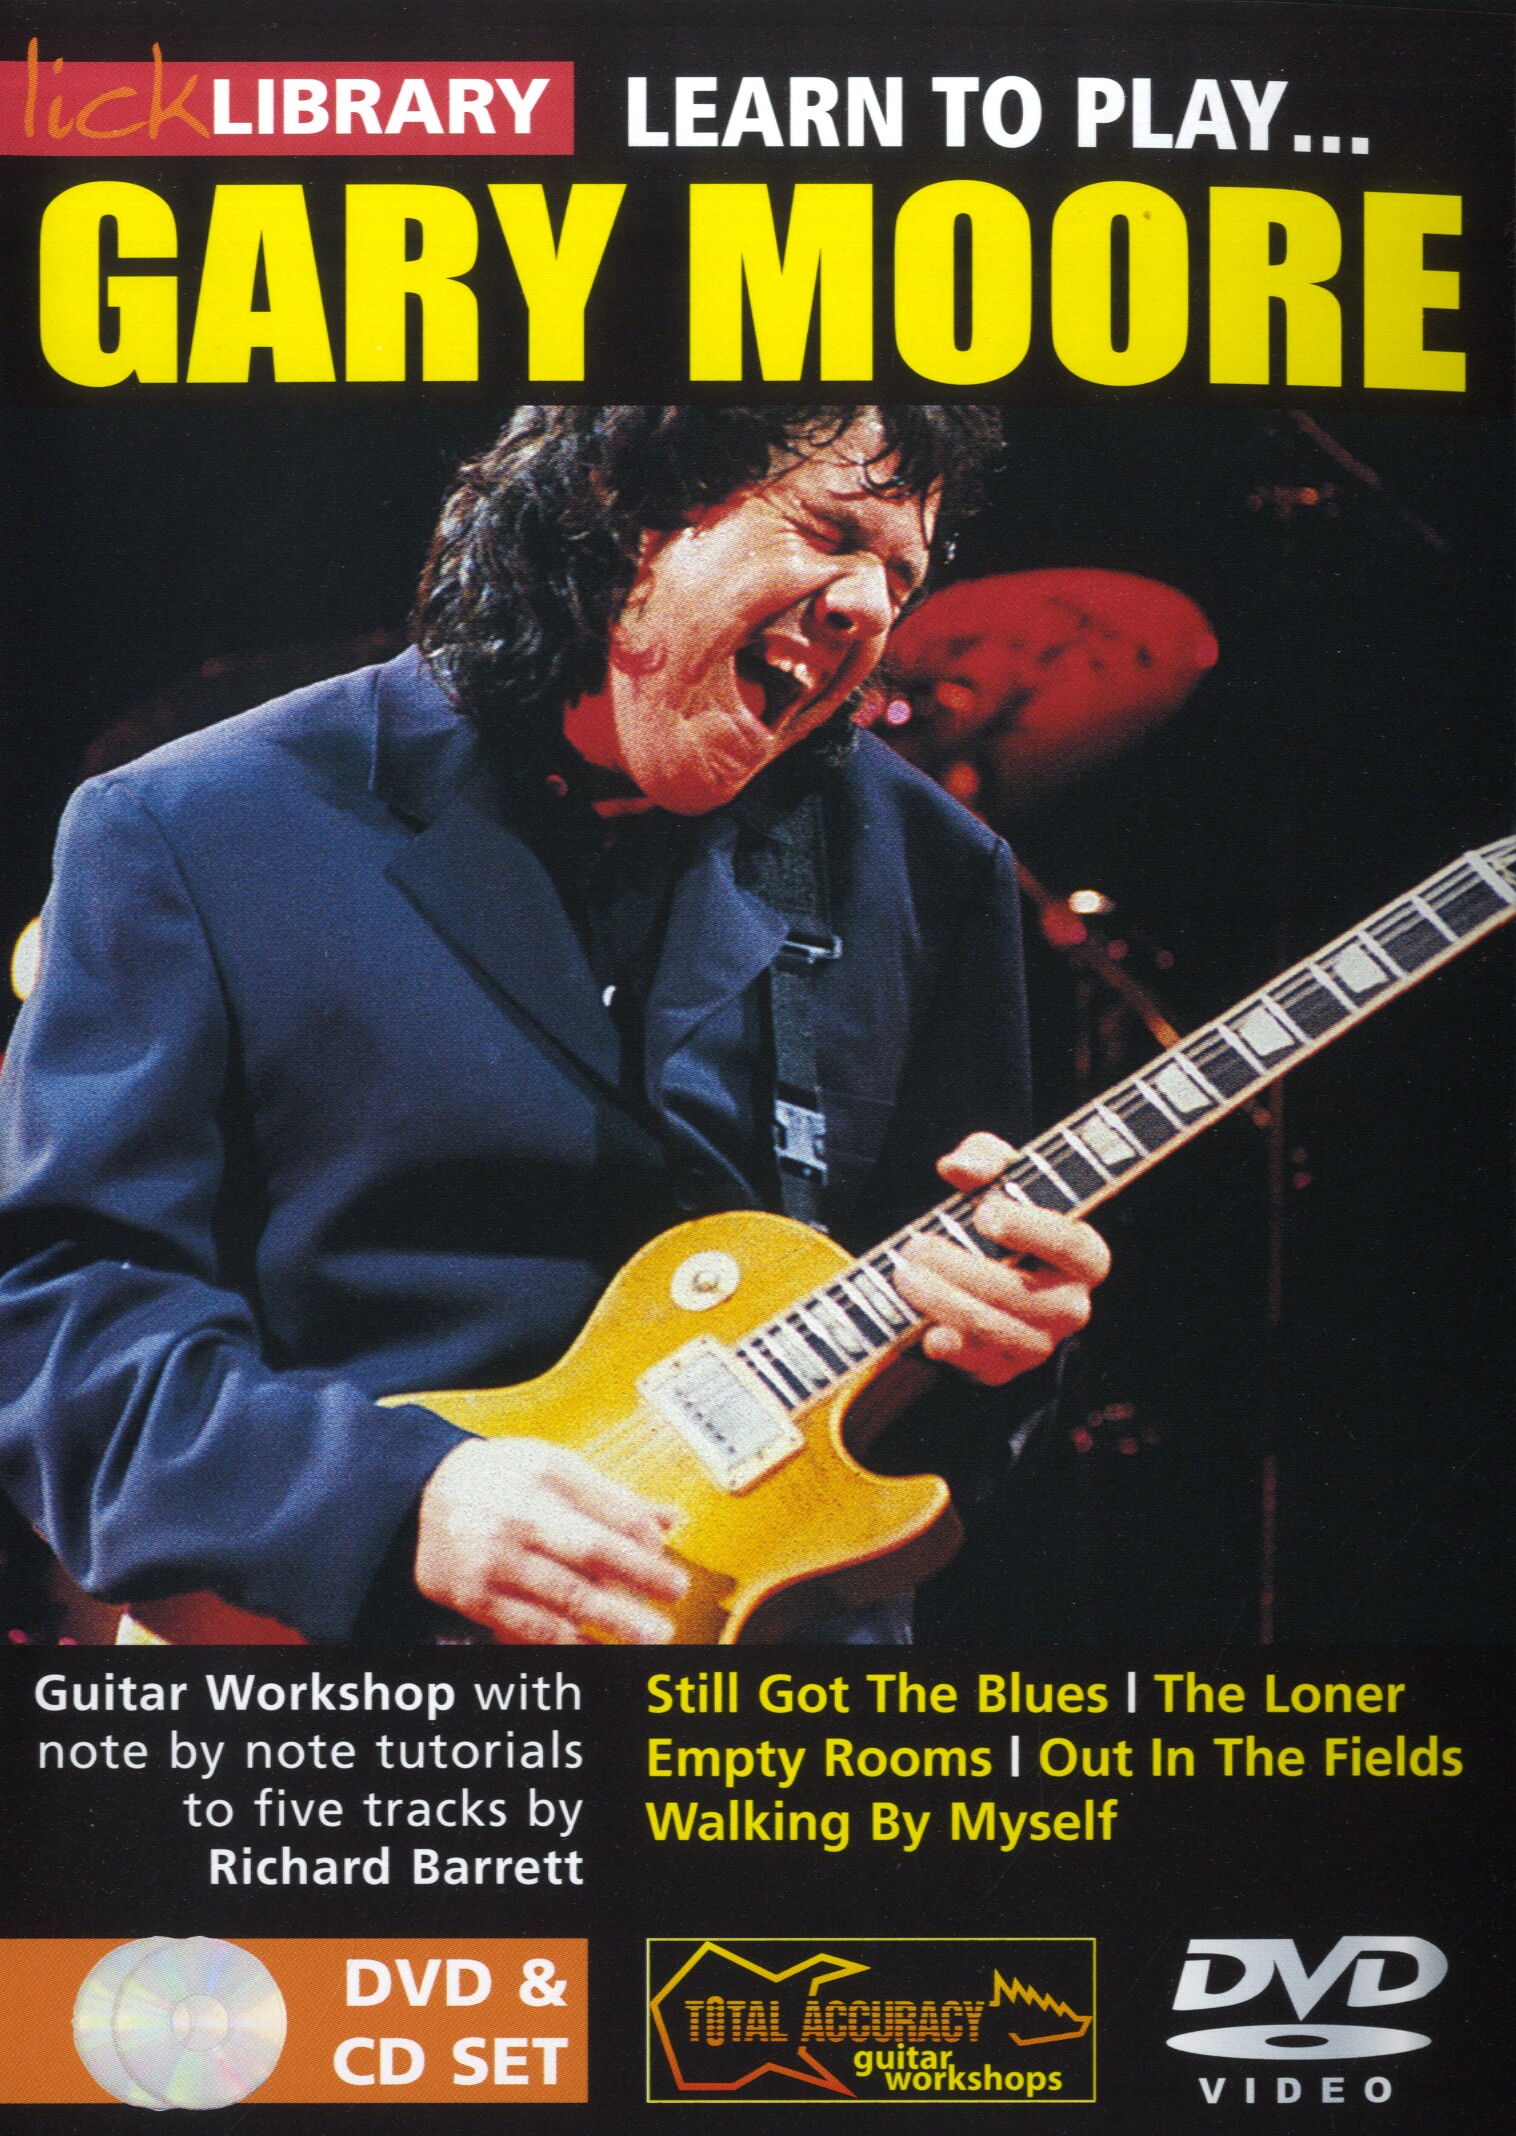 Walking myself. Gary Moore. The Loner Gary Moore обложка. Gary Moore обложка DVD. Gary Moore Guitars.